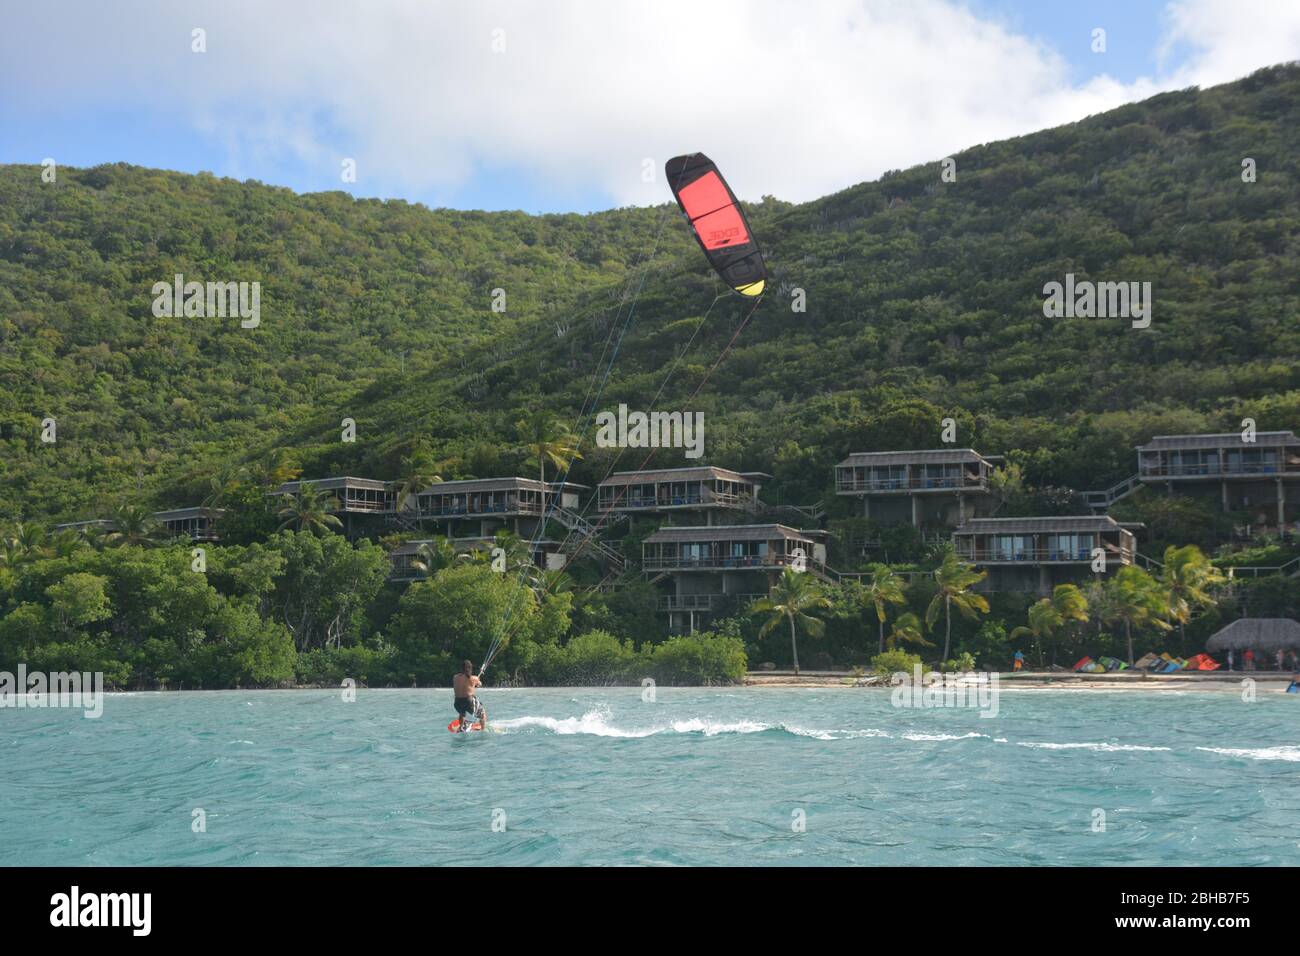 Kitesurfing in the British Virgin Islands. Stock Photo